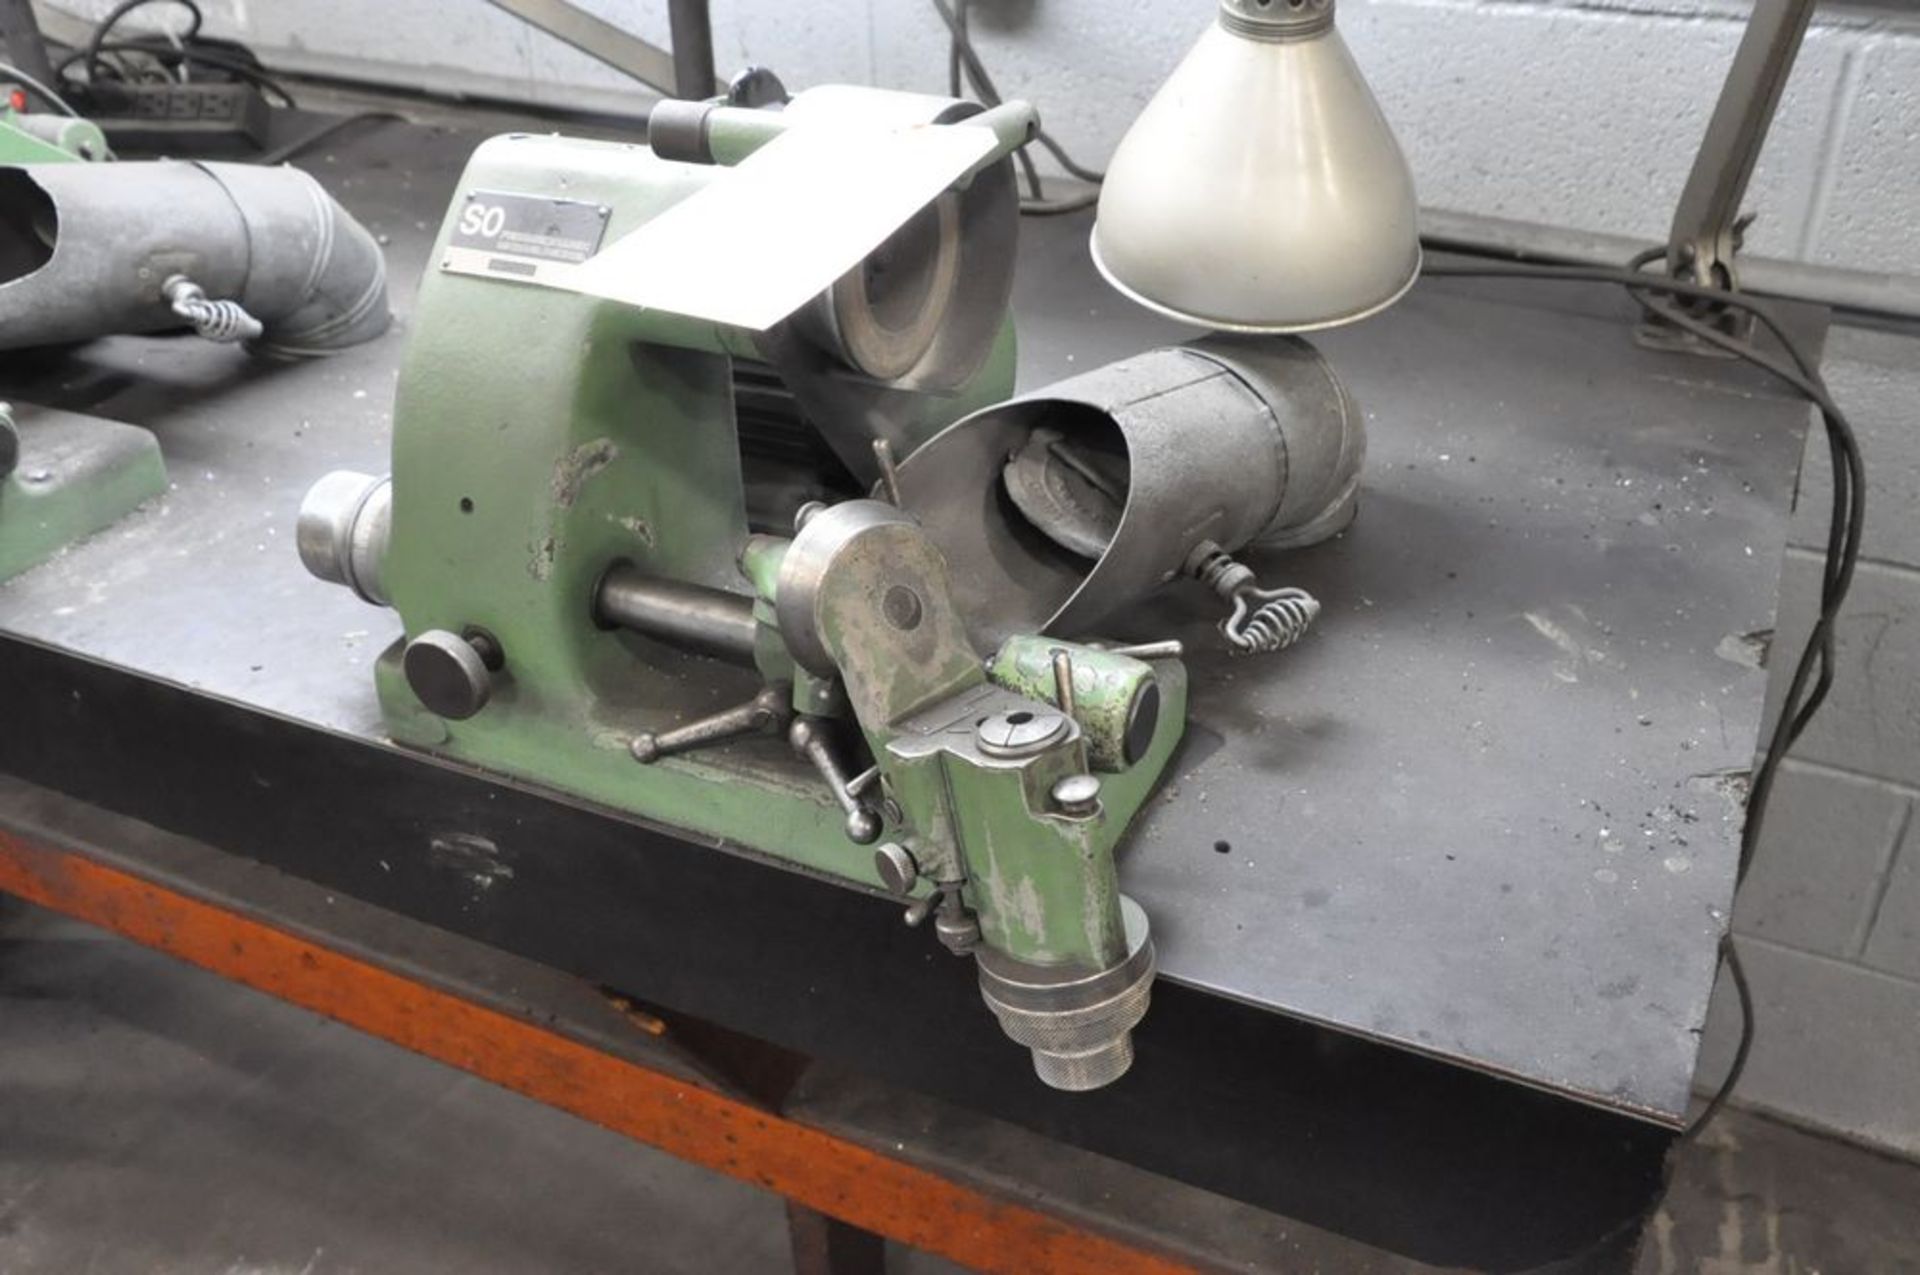 Deckel Model SO Tool Grinder, S/n 86-23006 with (6) Collets